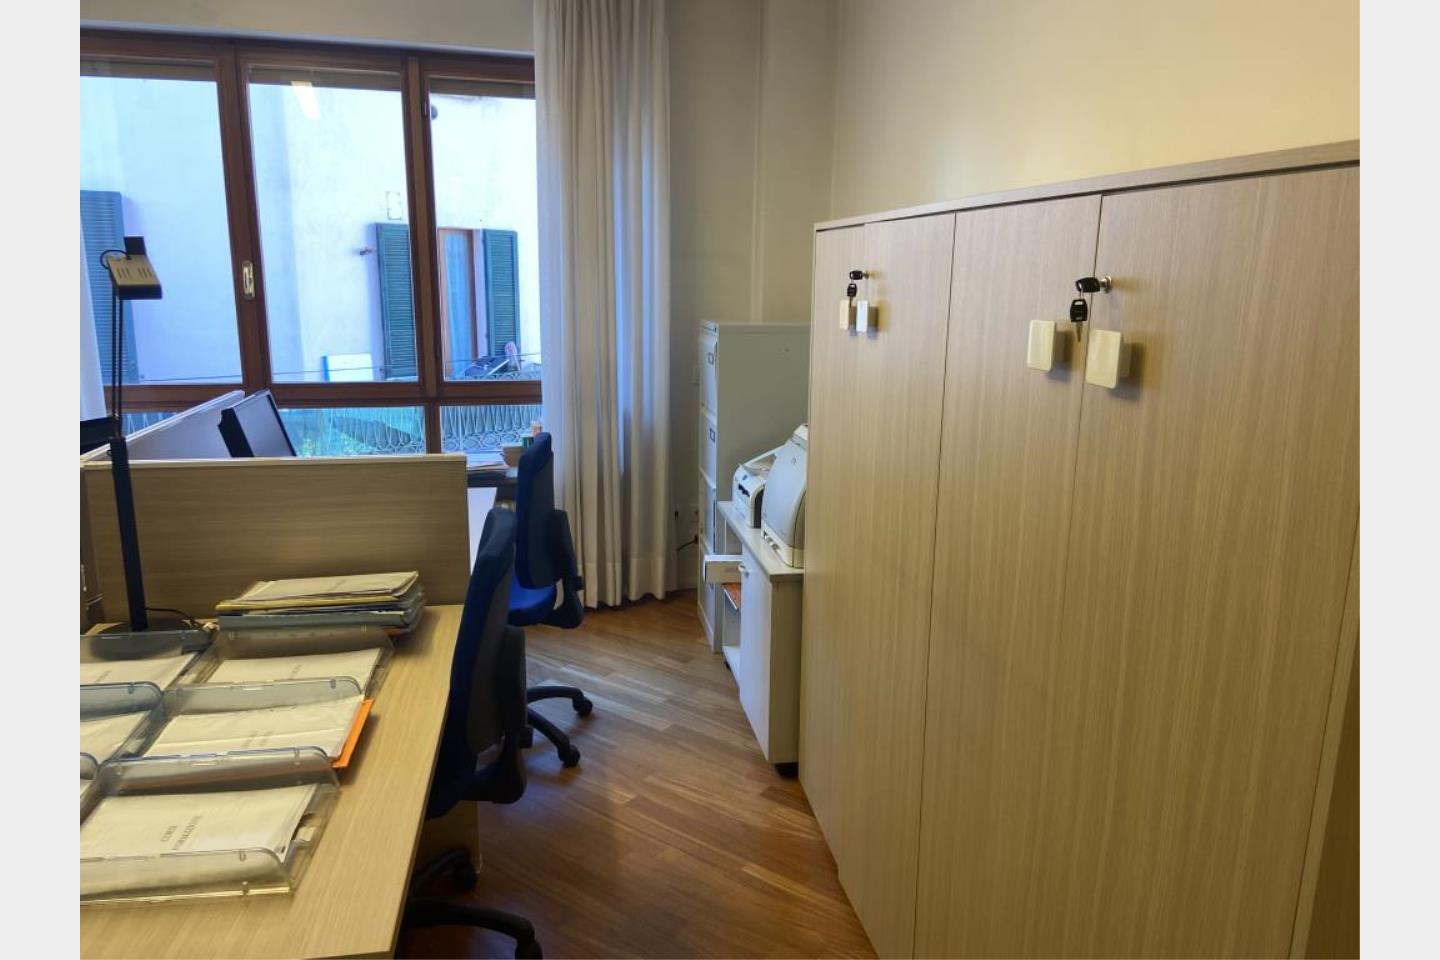 Ufficio in Affitto Varese